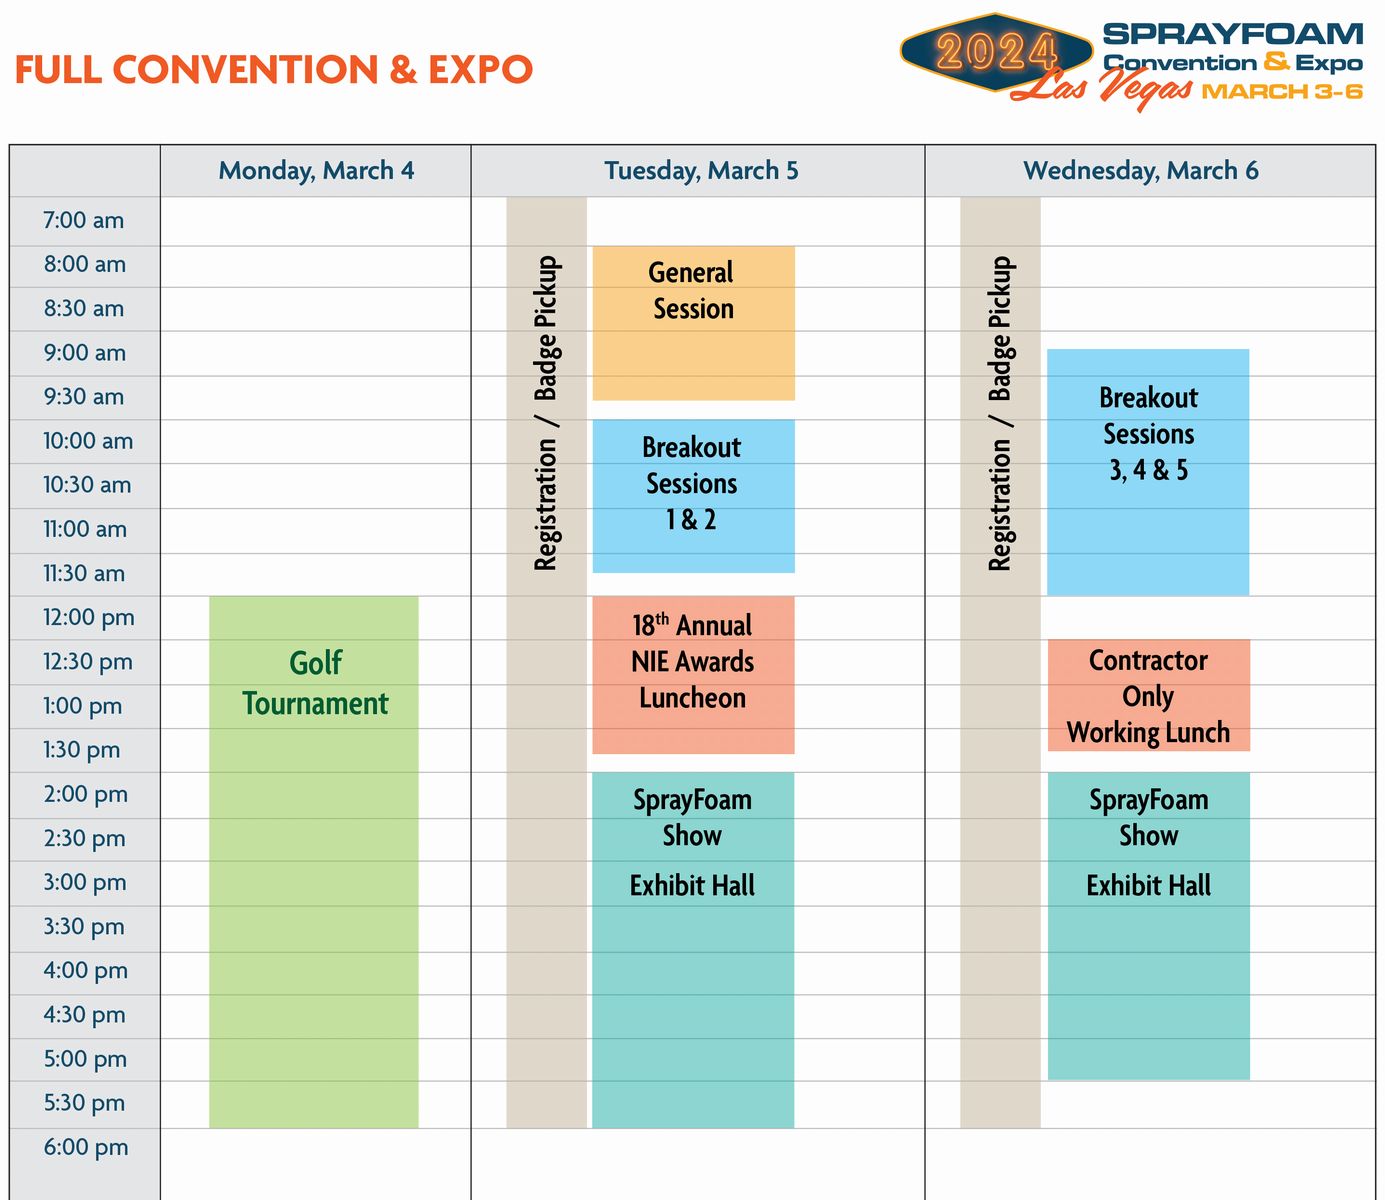 SprayFoam 2024 Convention and Expo - Schedule 2